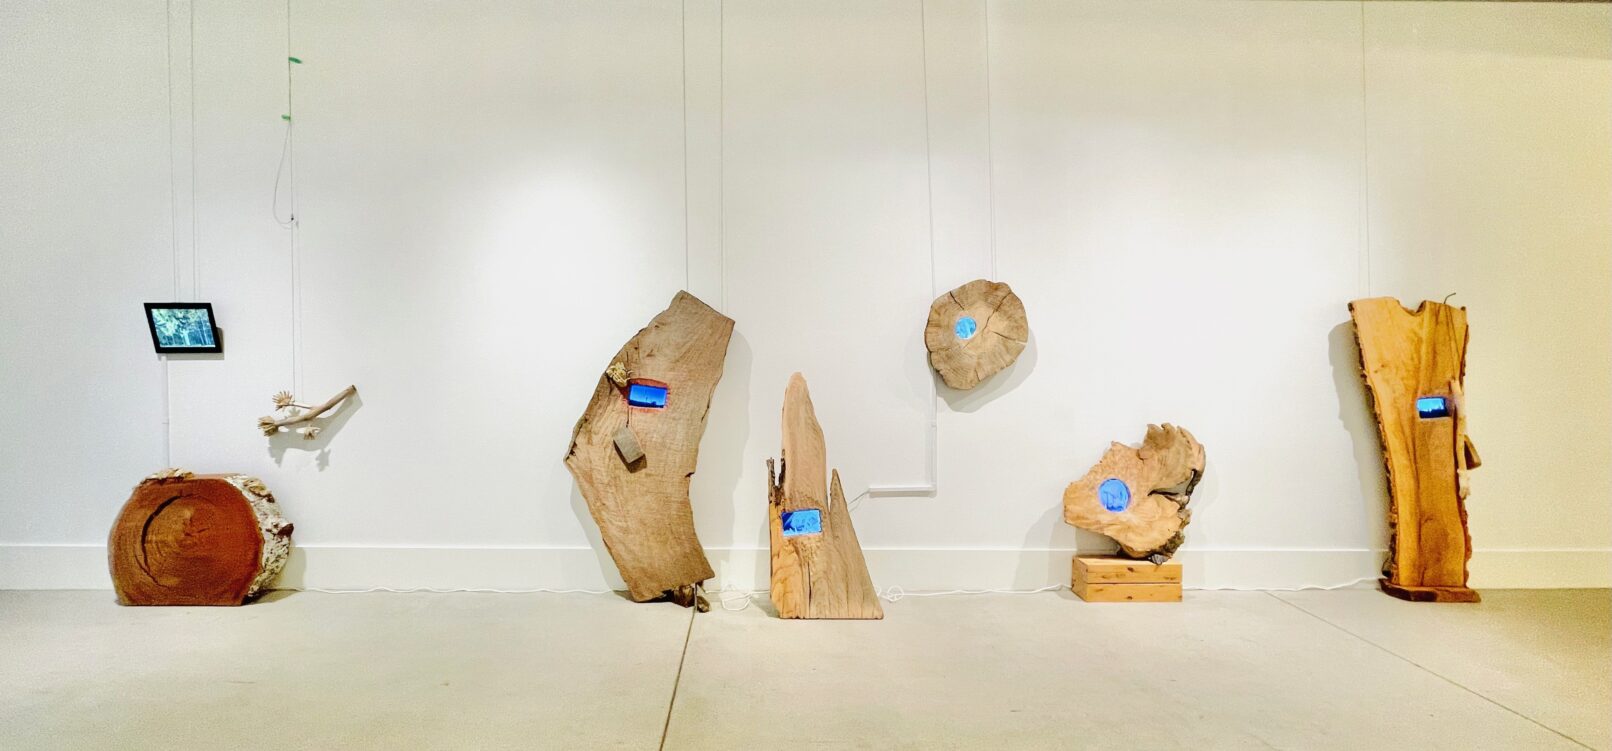 multi-media installation by artist Patricia Sannit